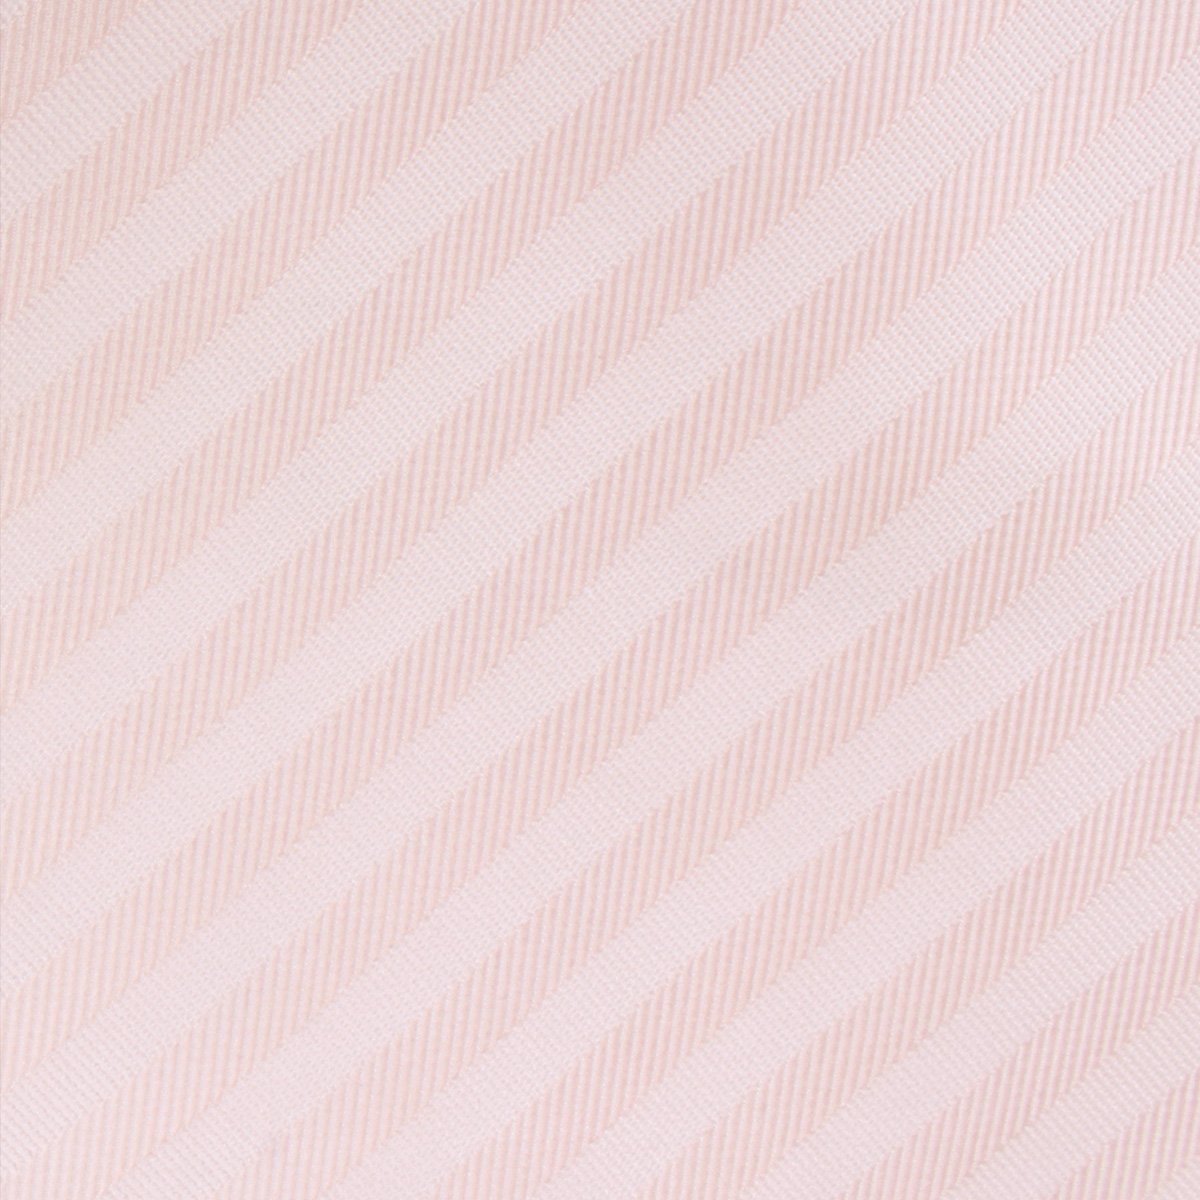 Flamenco Blush Pink Striped Skinny Tie Fabric